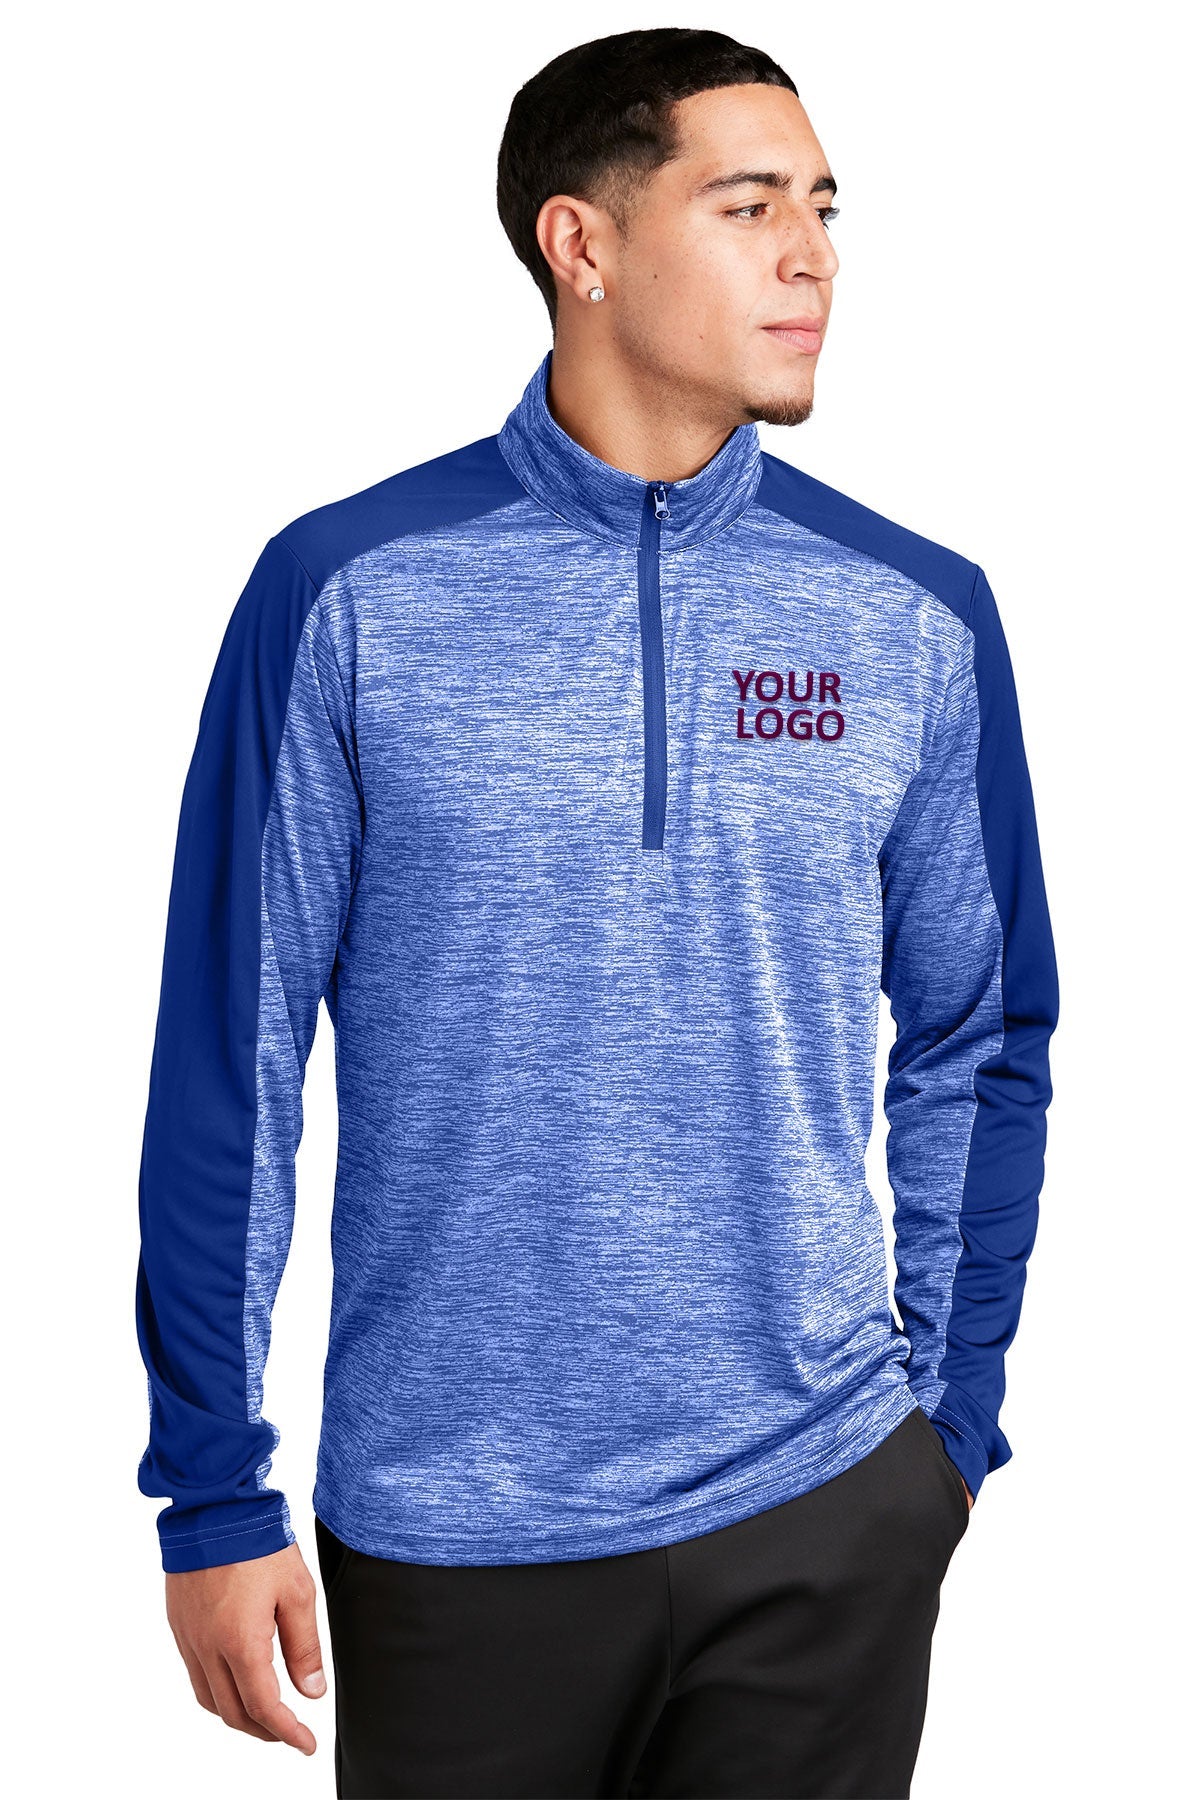 Sport-Tek True Royal Electric/ True Royal ST397 sweatshirts with company logo